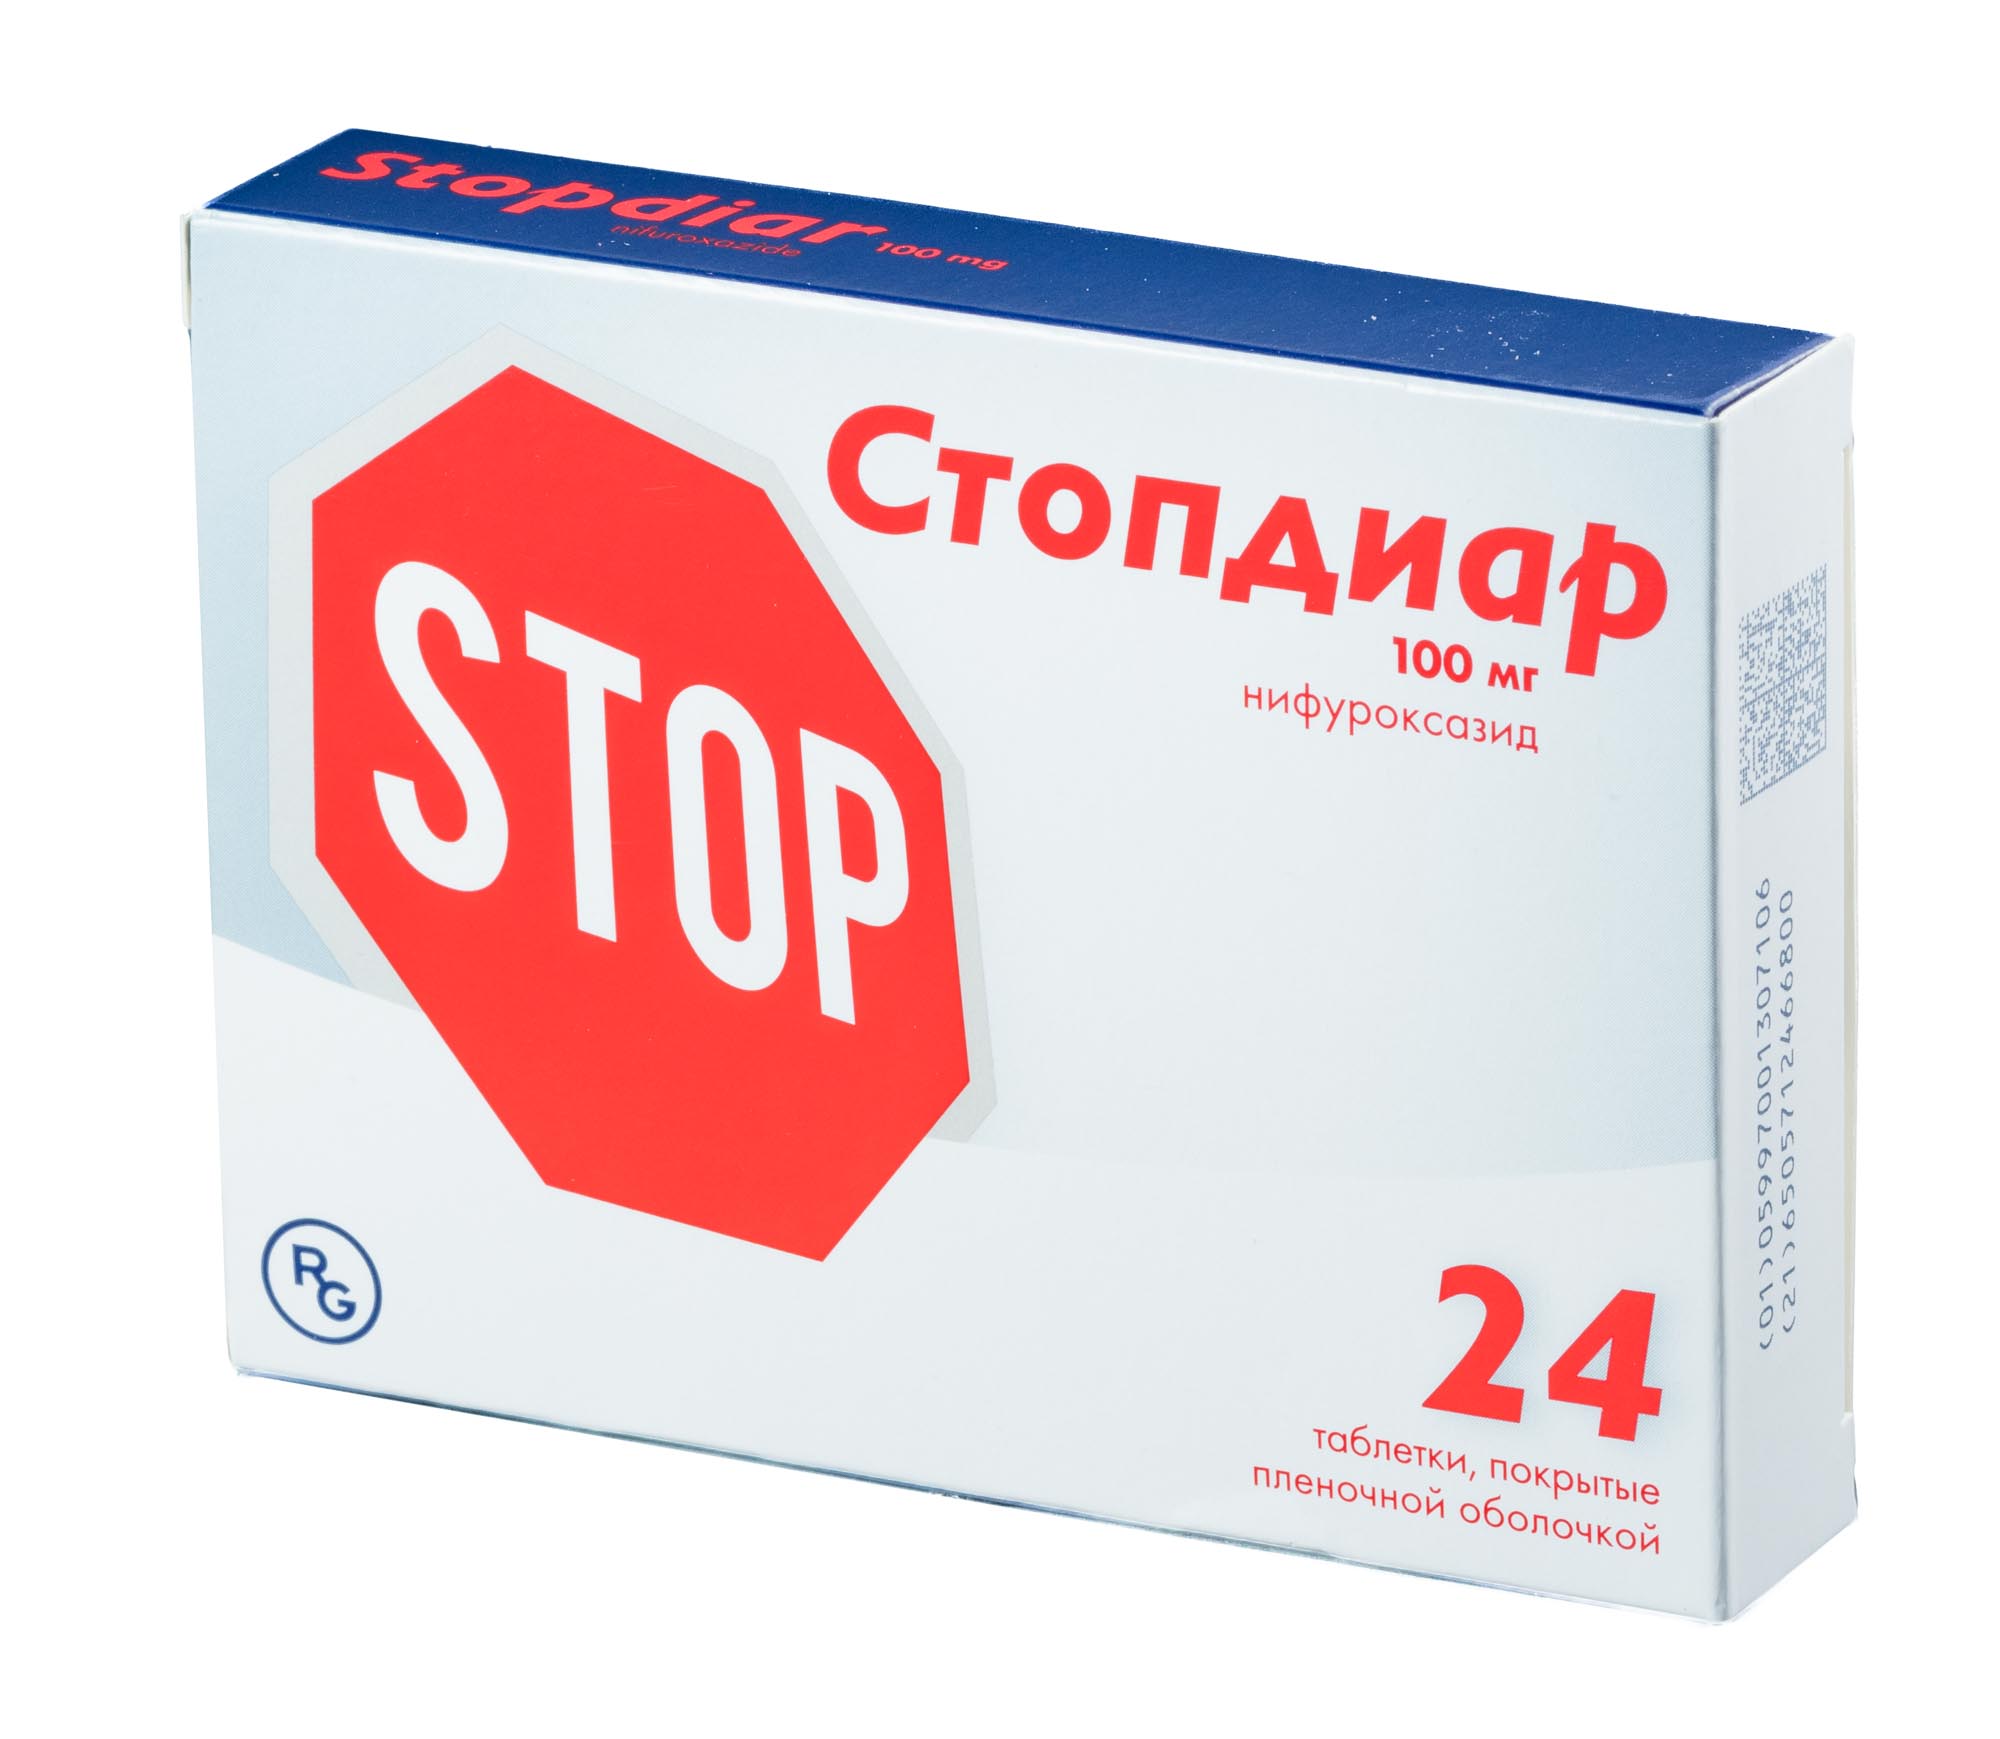 Стопдиар, таблетки покрыт. плен. об. 100 мг, 24 шт. московское фламенко